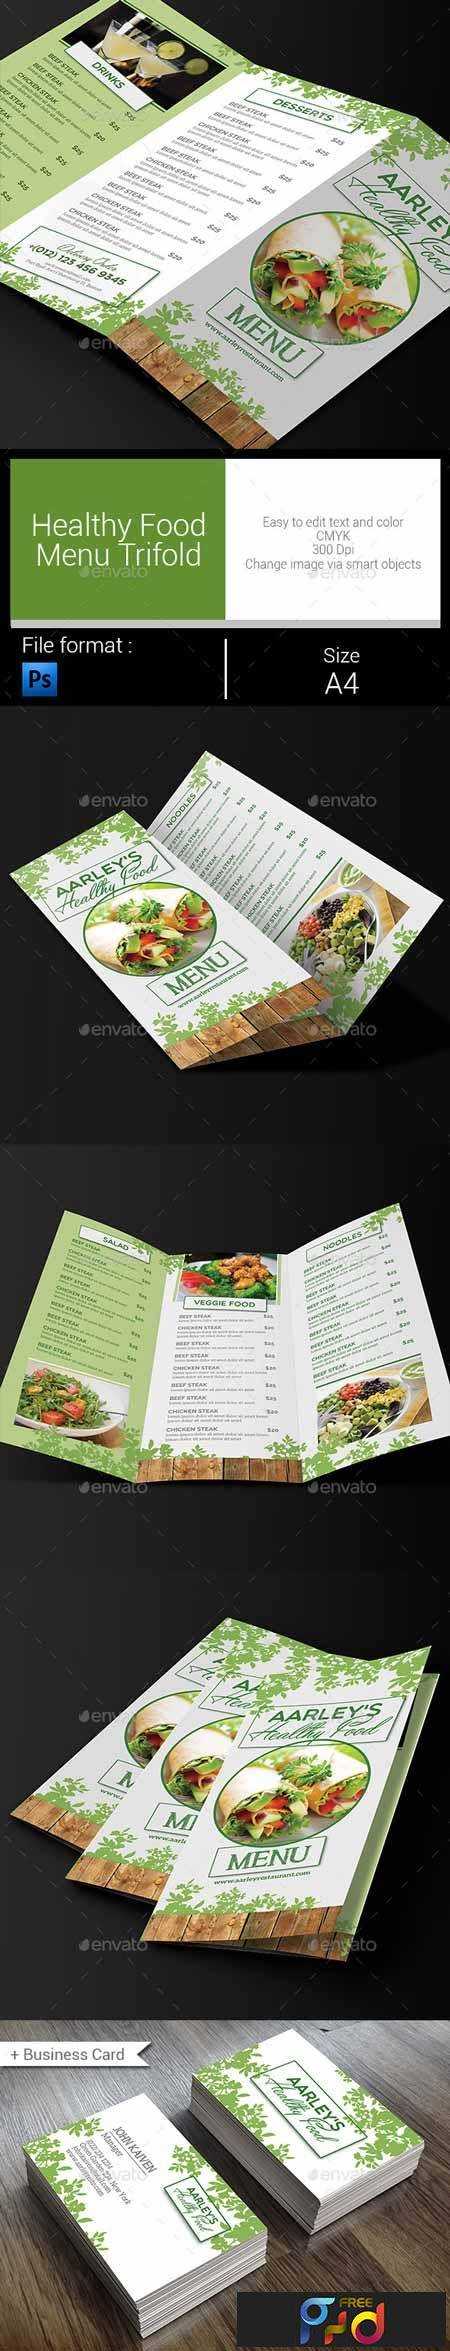 freepsdvn-com_1425883216_healthy-food-menu-trifold-10311054